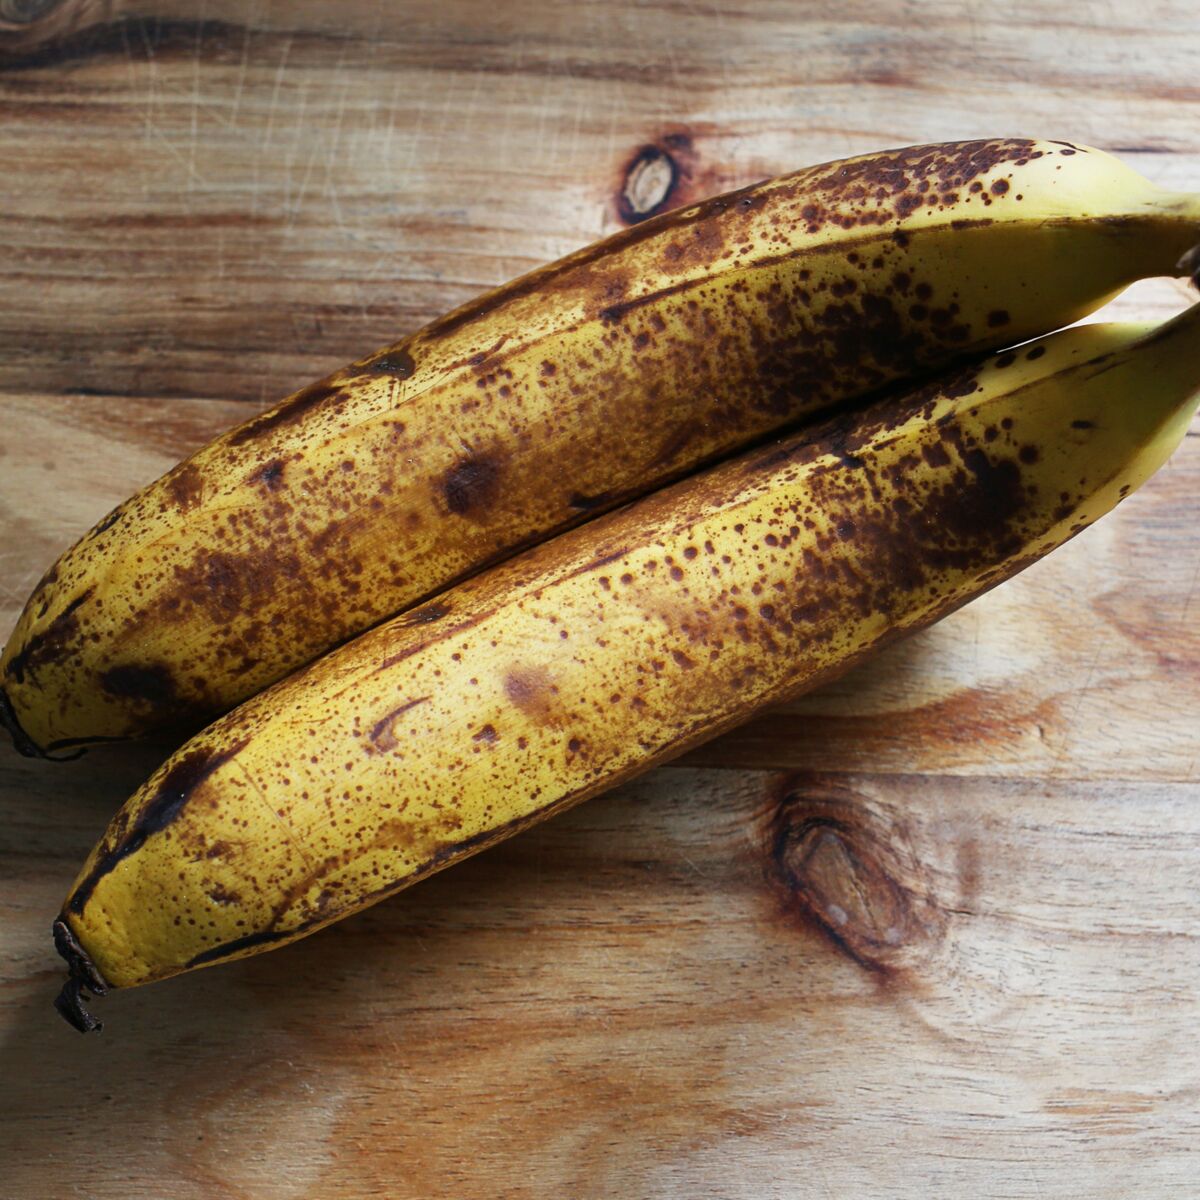 Sac de conservation bananes